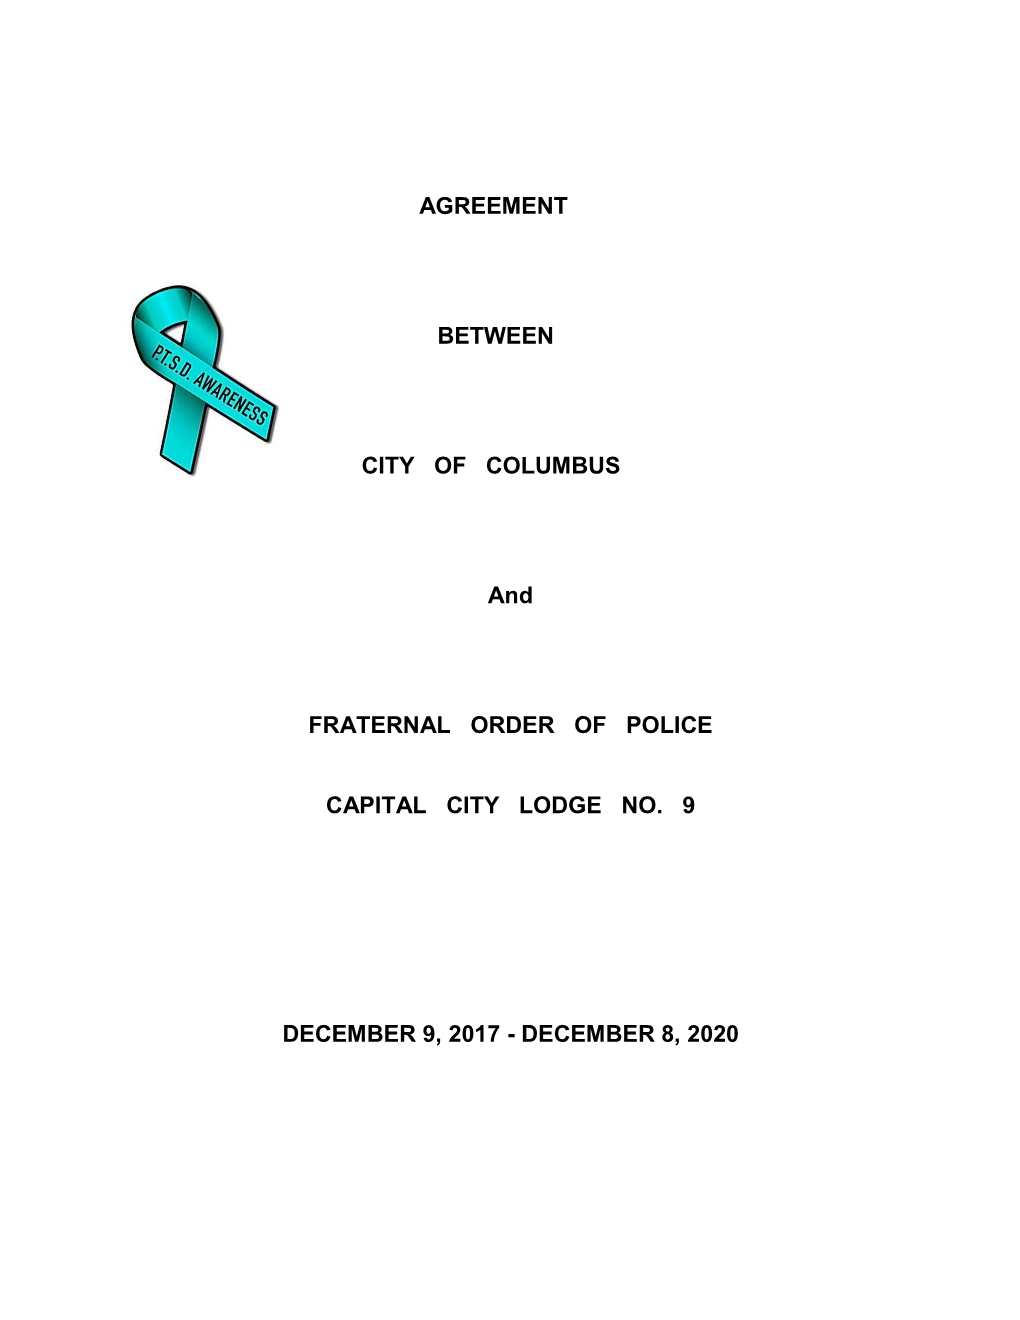 Agreement Between City of Columbus